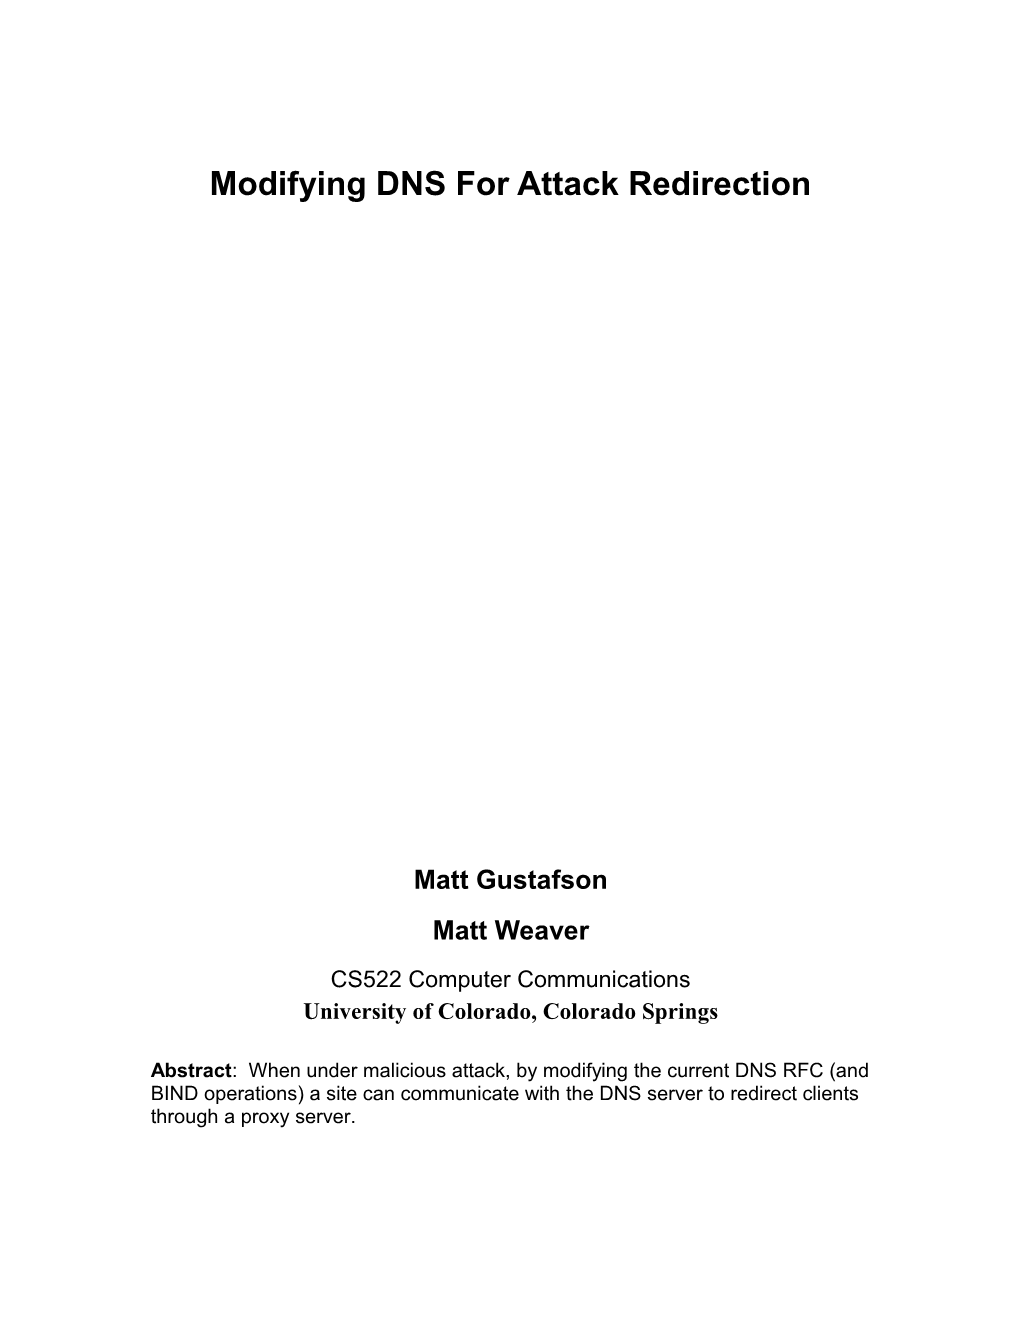 Under Attack: Rerouting Through the DNS Server